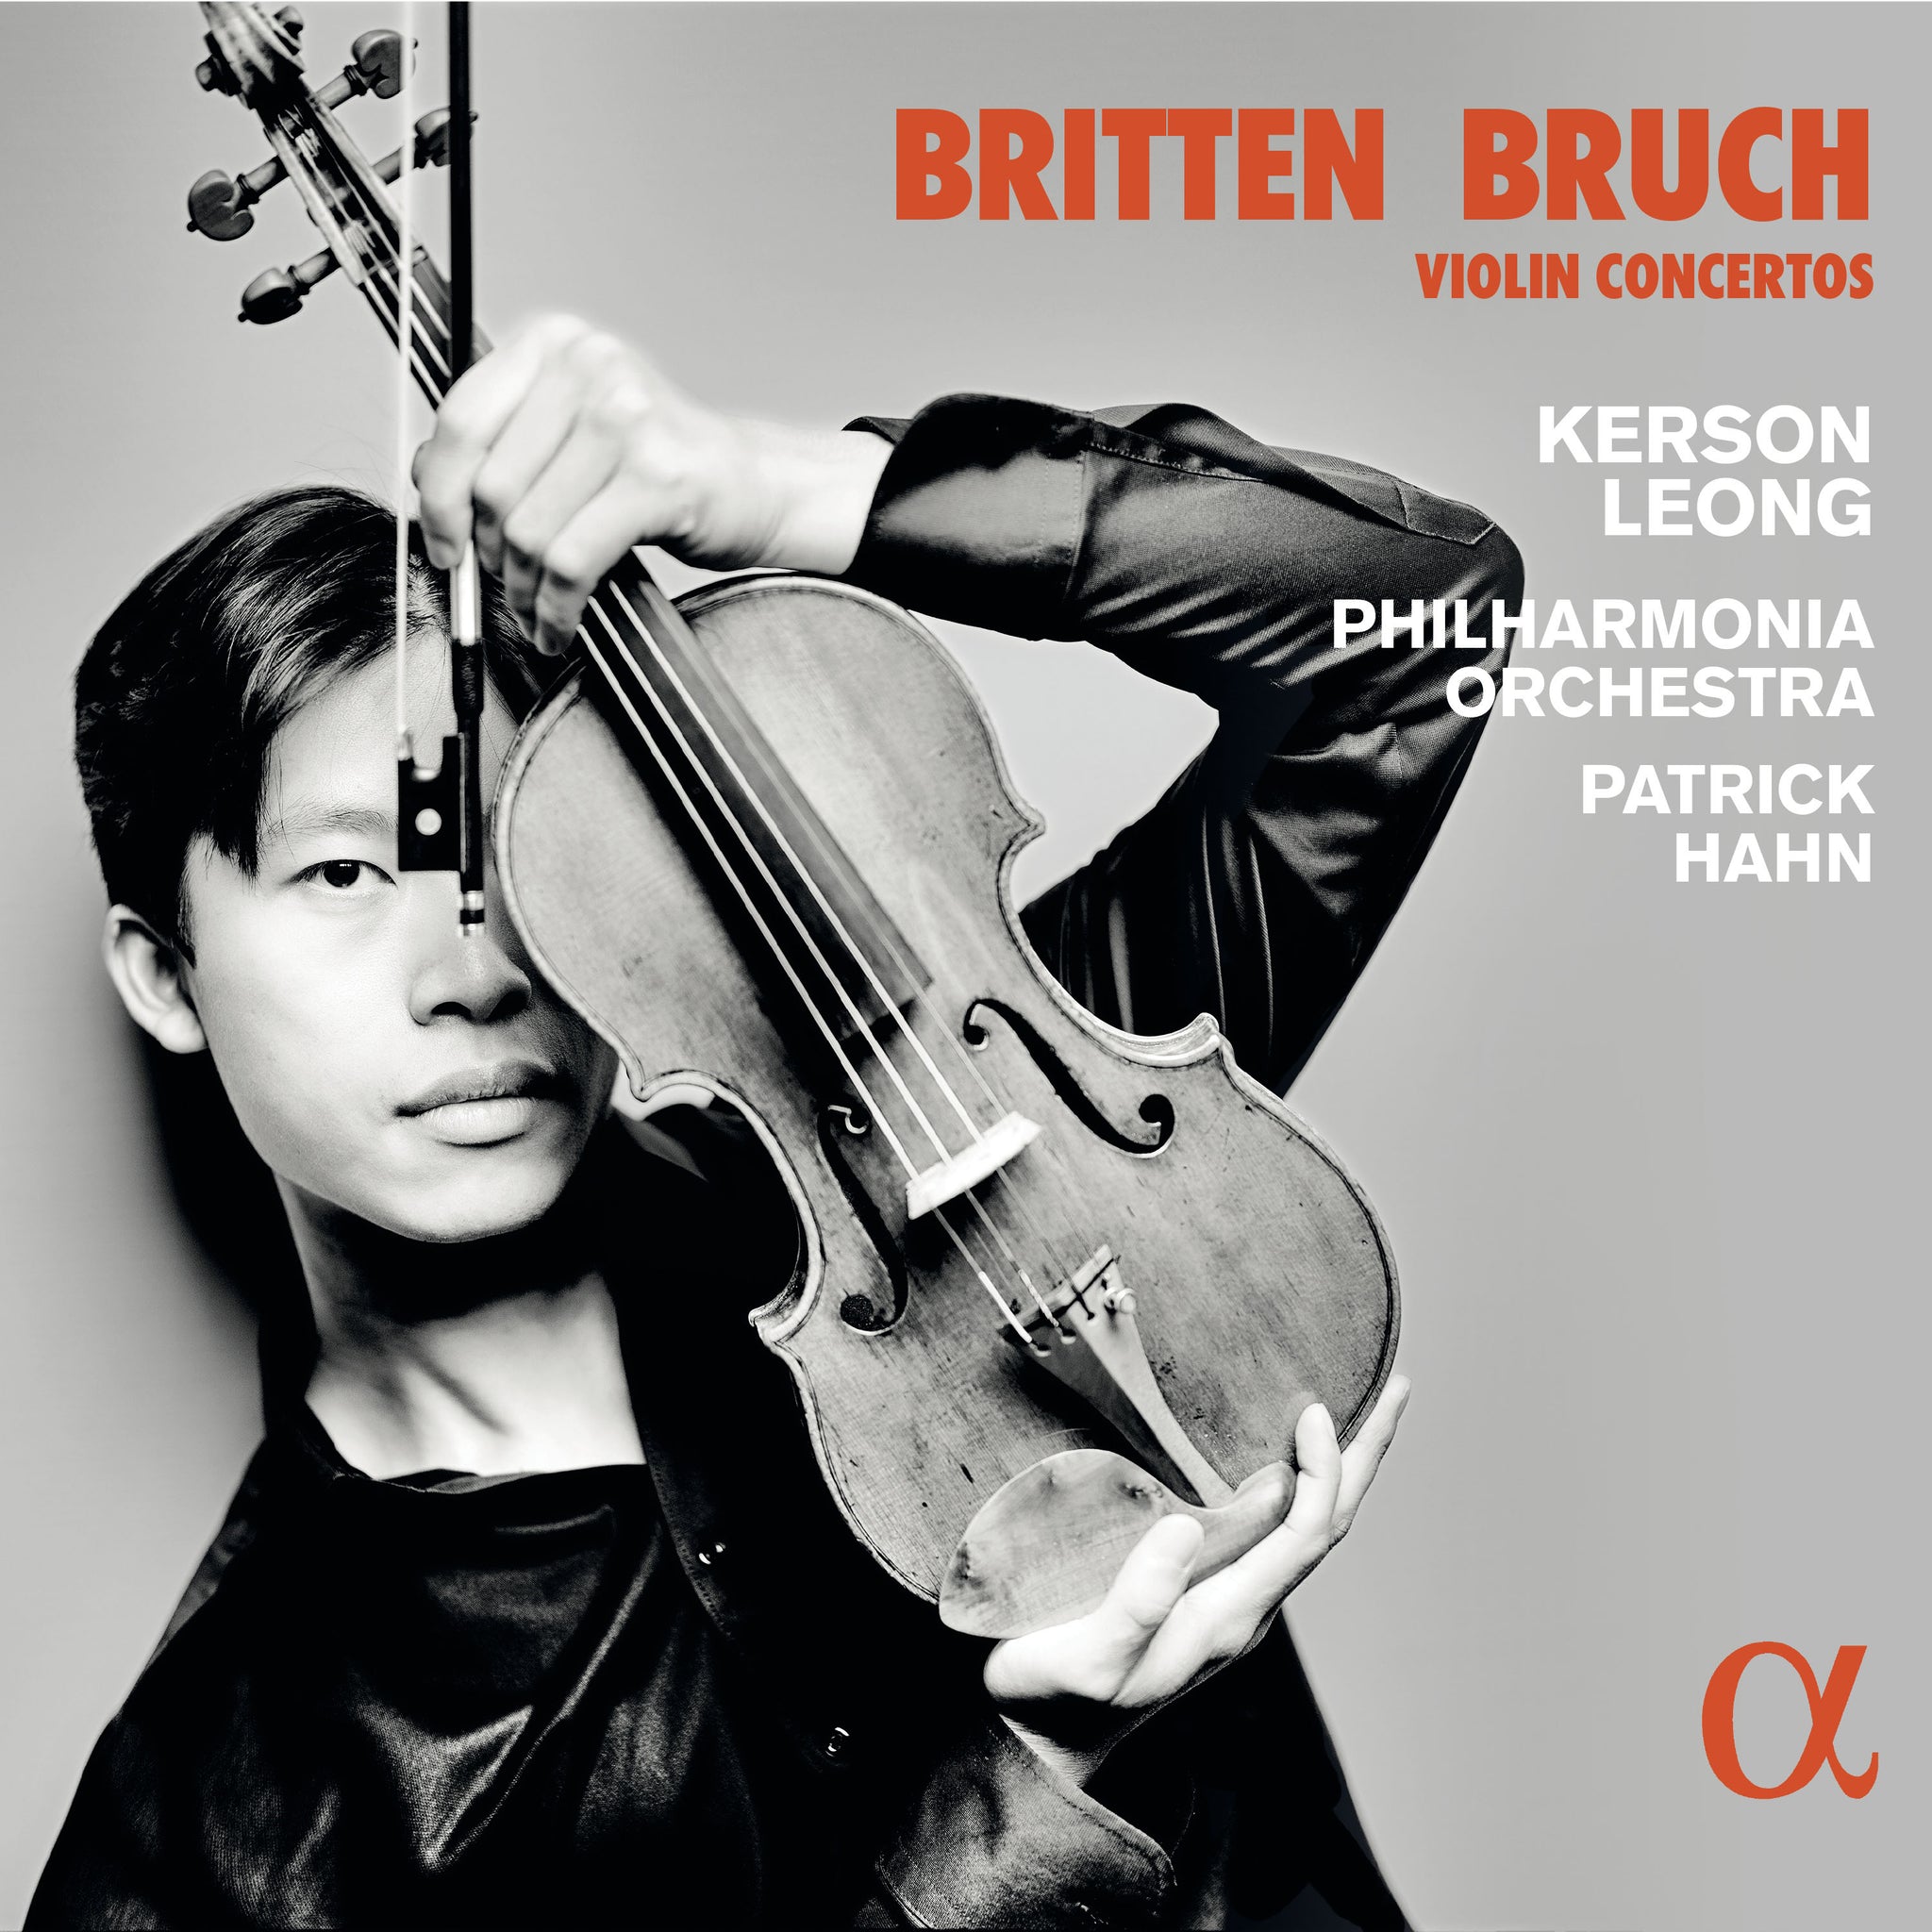 Britten & Bruch: Violin Concertos / Kerson Leong, Hahn, Philharmonia Orchestra